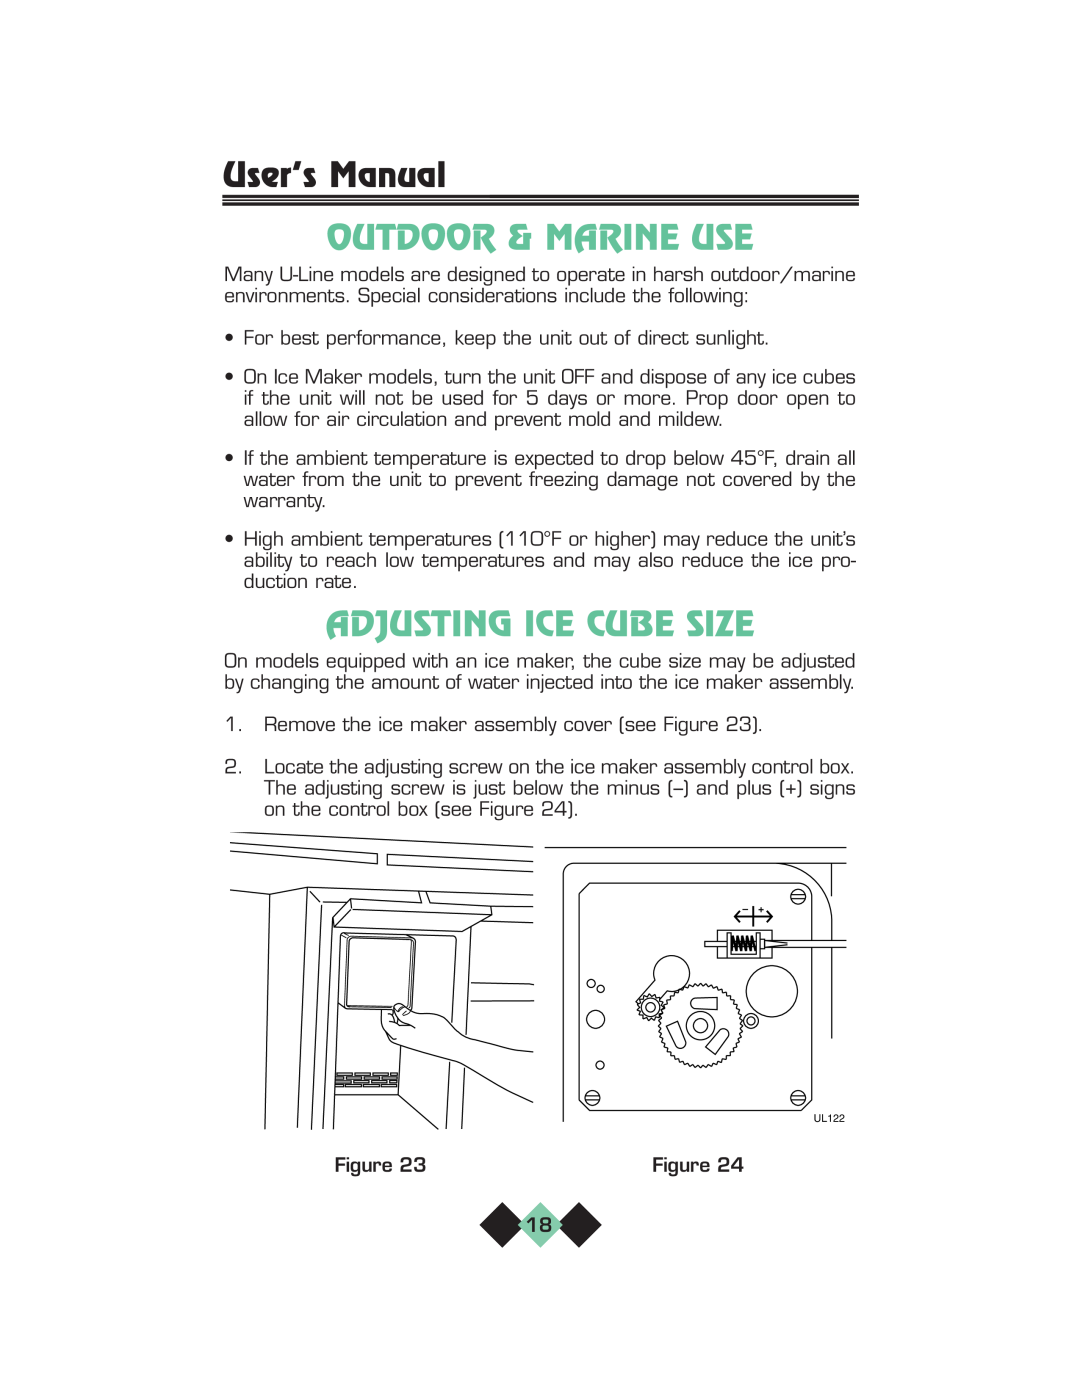 U-Line pmn manual Outdoor & Marine Use, Adjusting Ice Cube Size, User’s Manual 